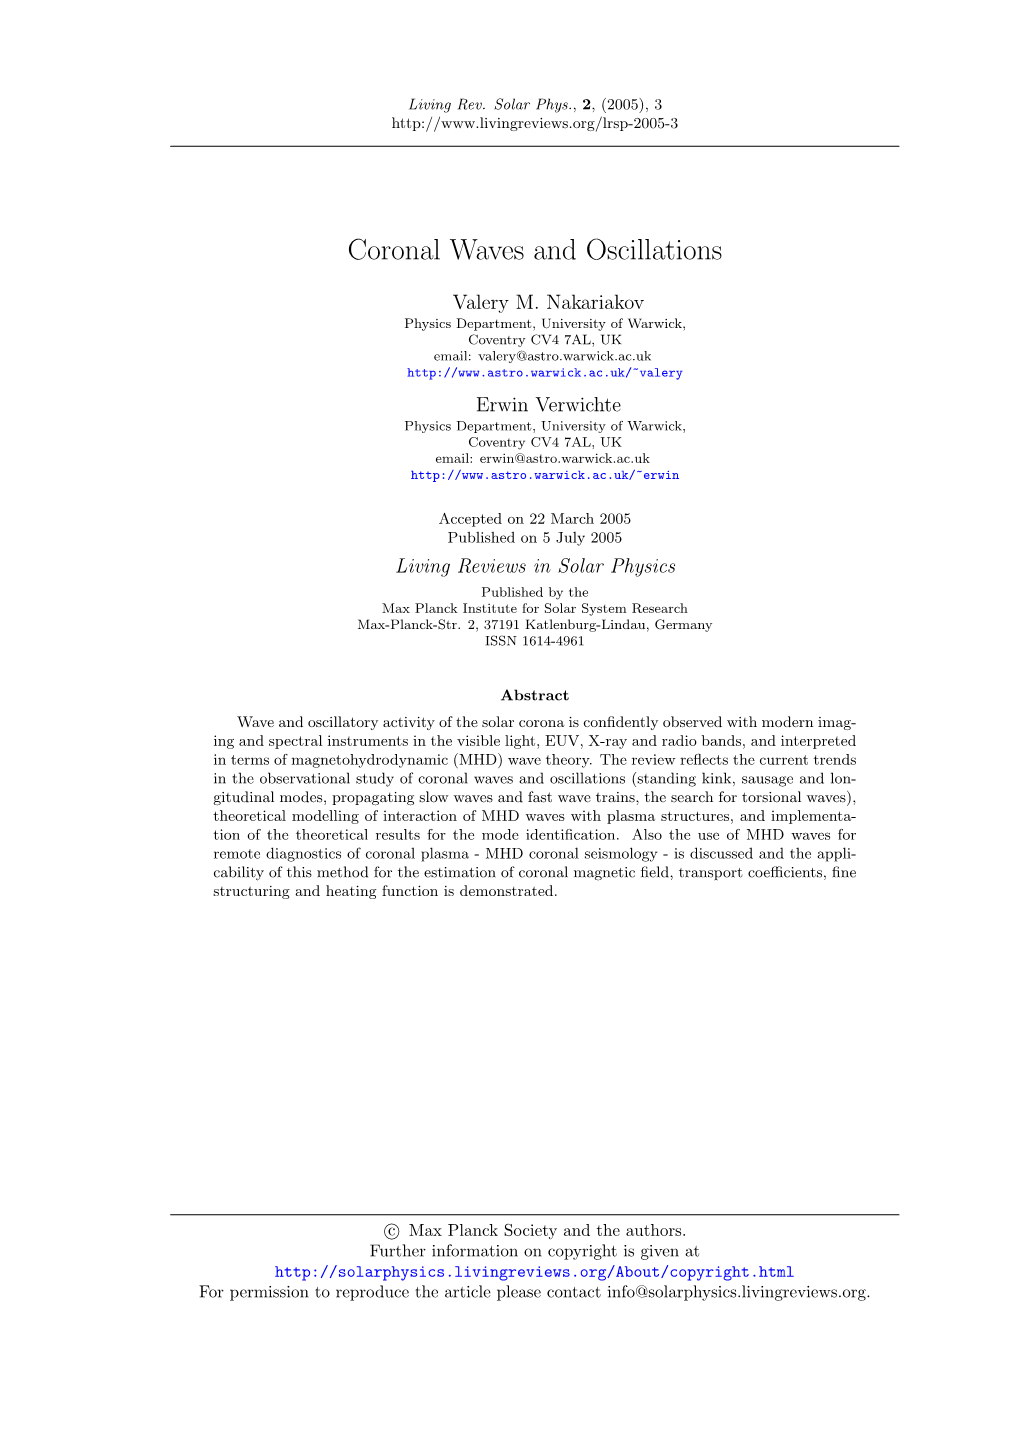 Coronal Waves and Oscillations